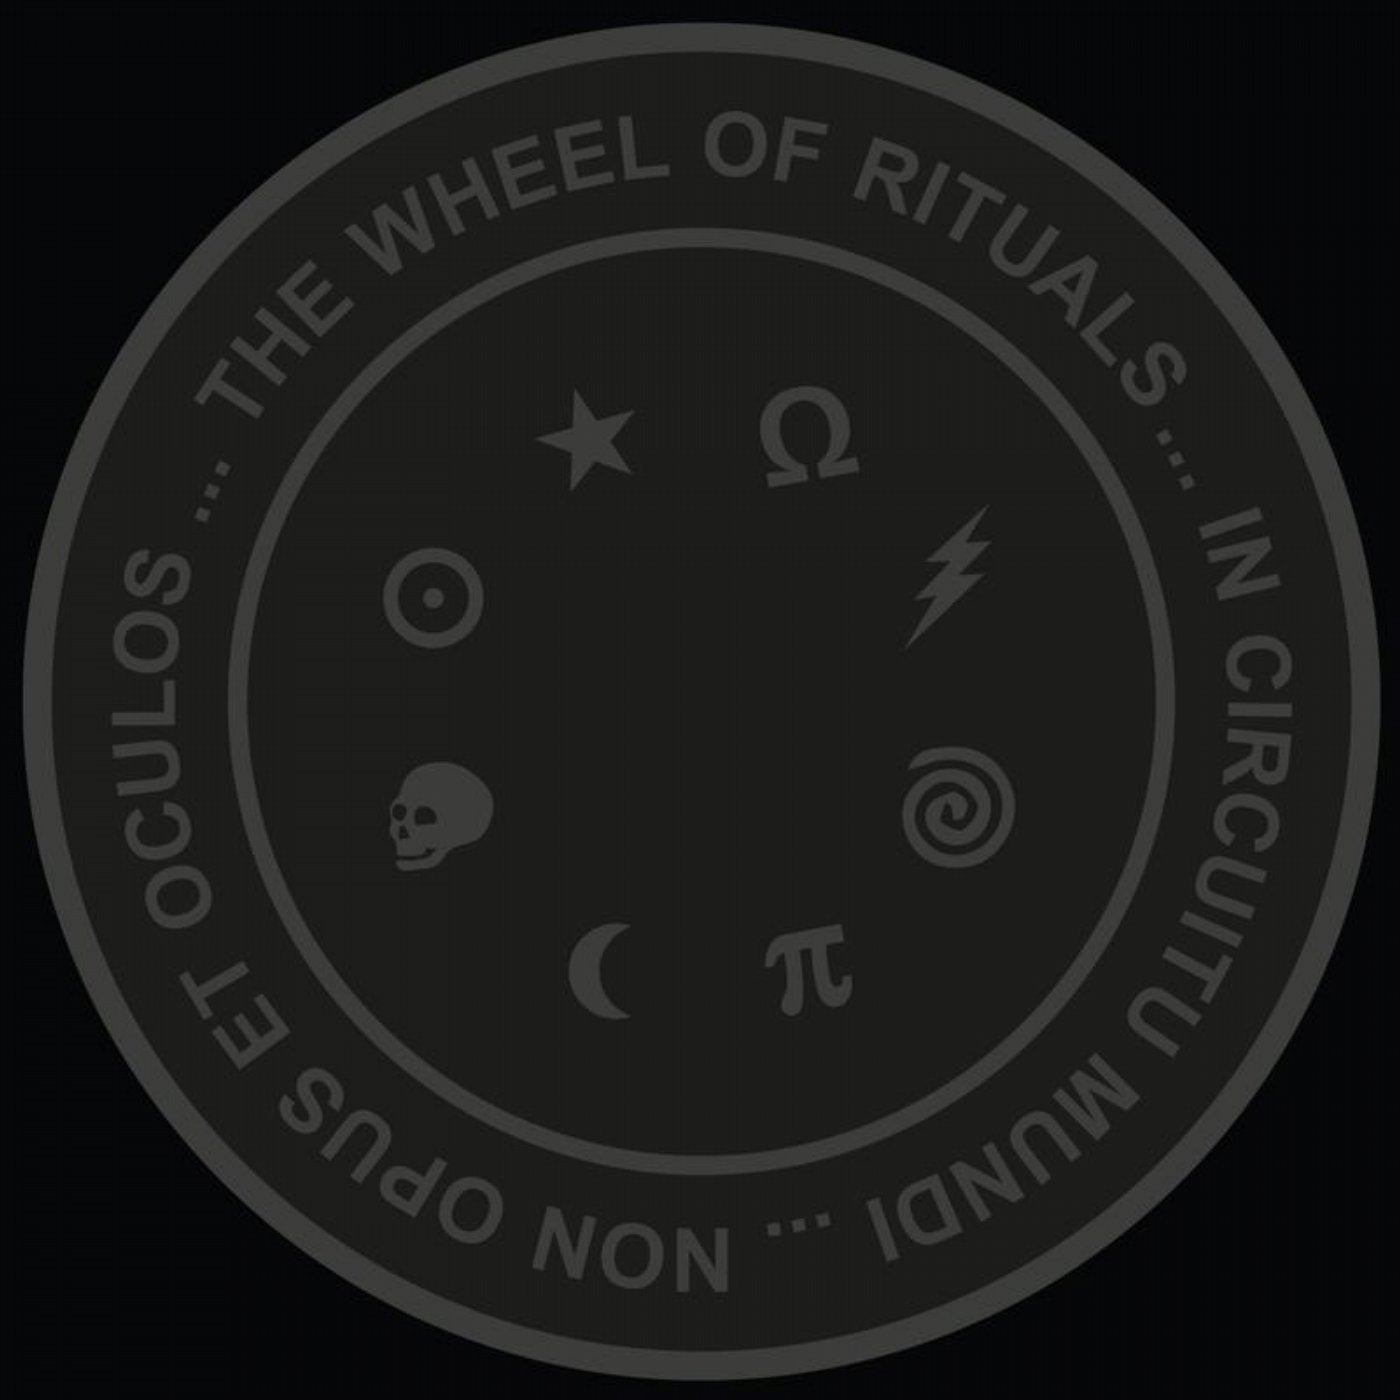 The Wheel of Rituals